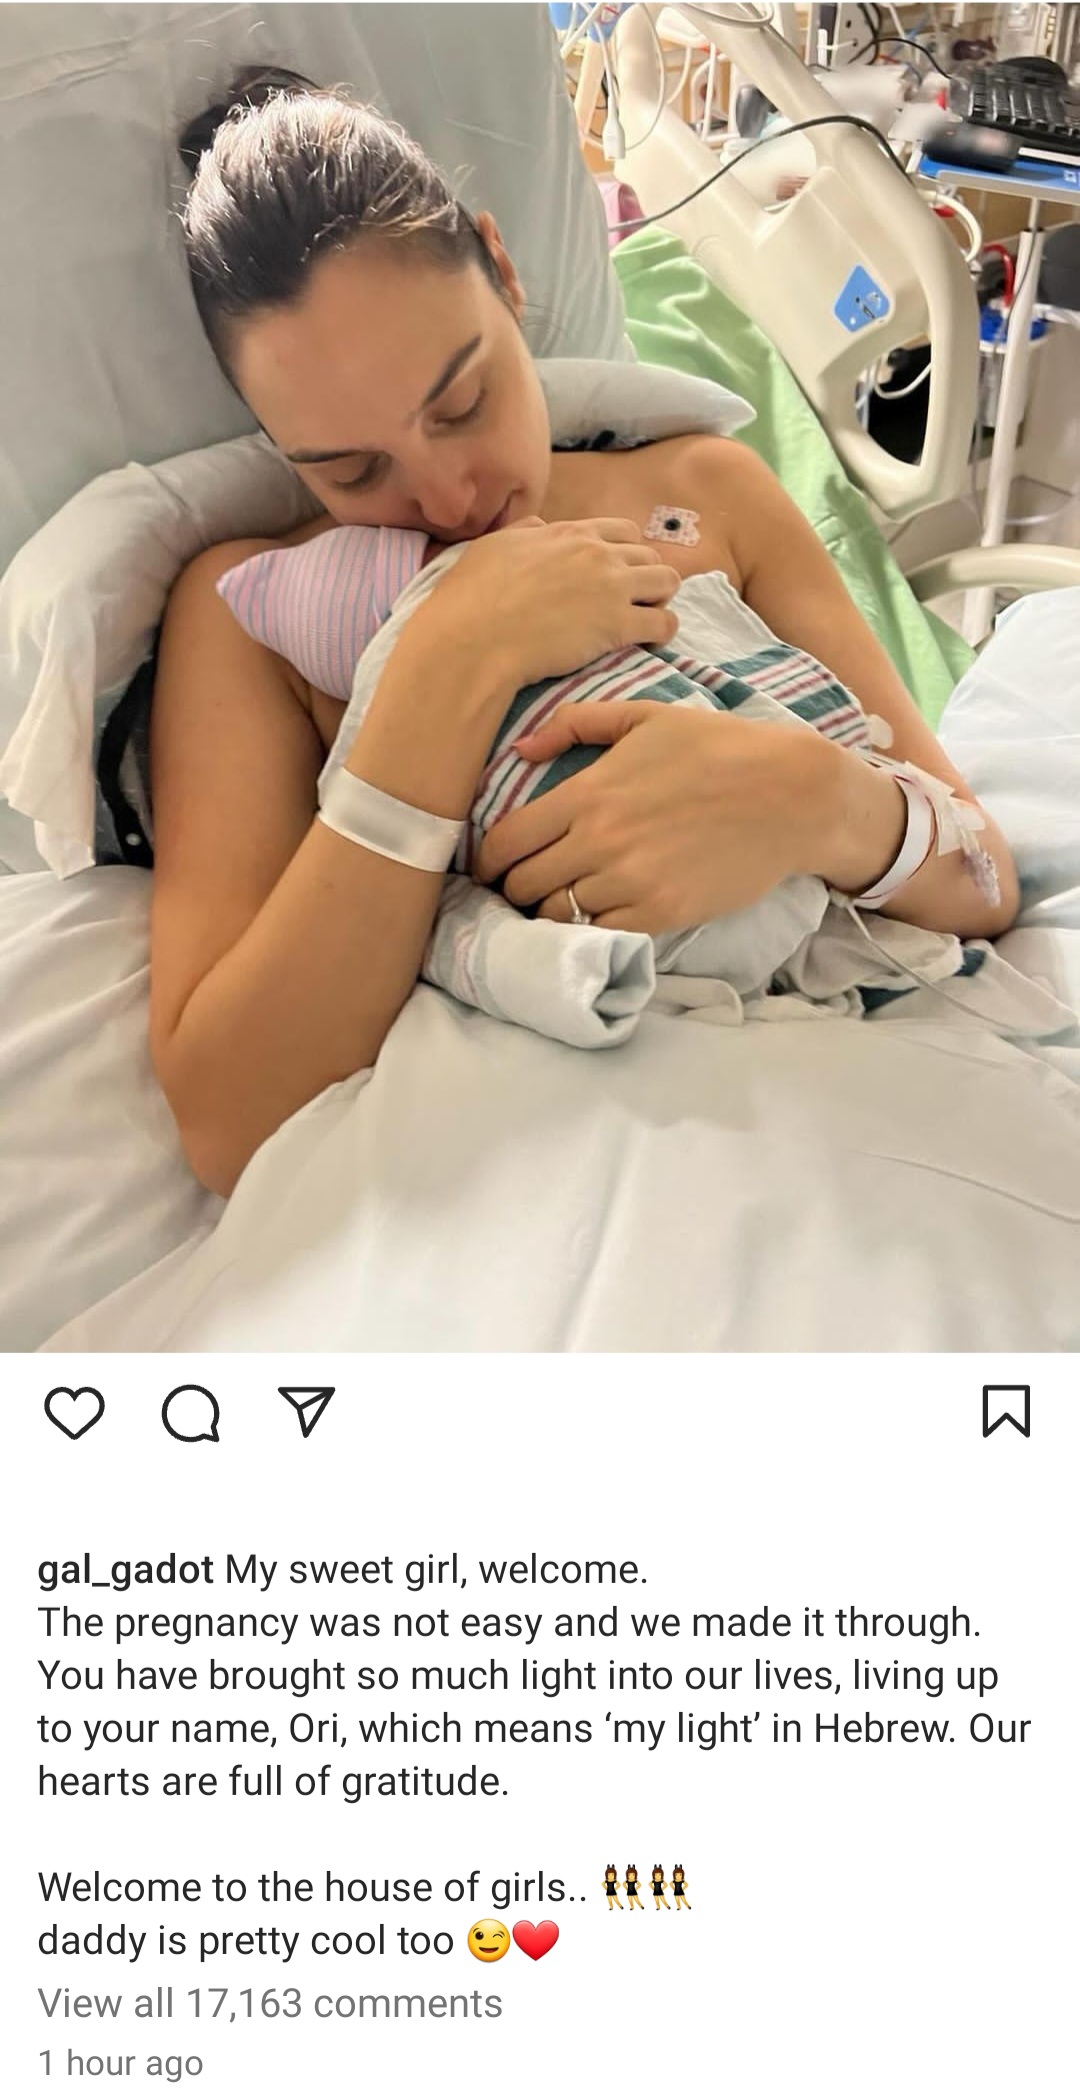 Wonderwoman star, Gal Gadot welcomes 4th child with husband Jaron Varsano